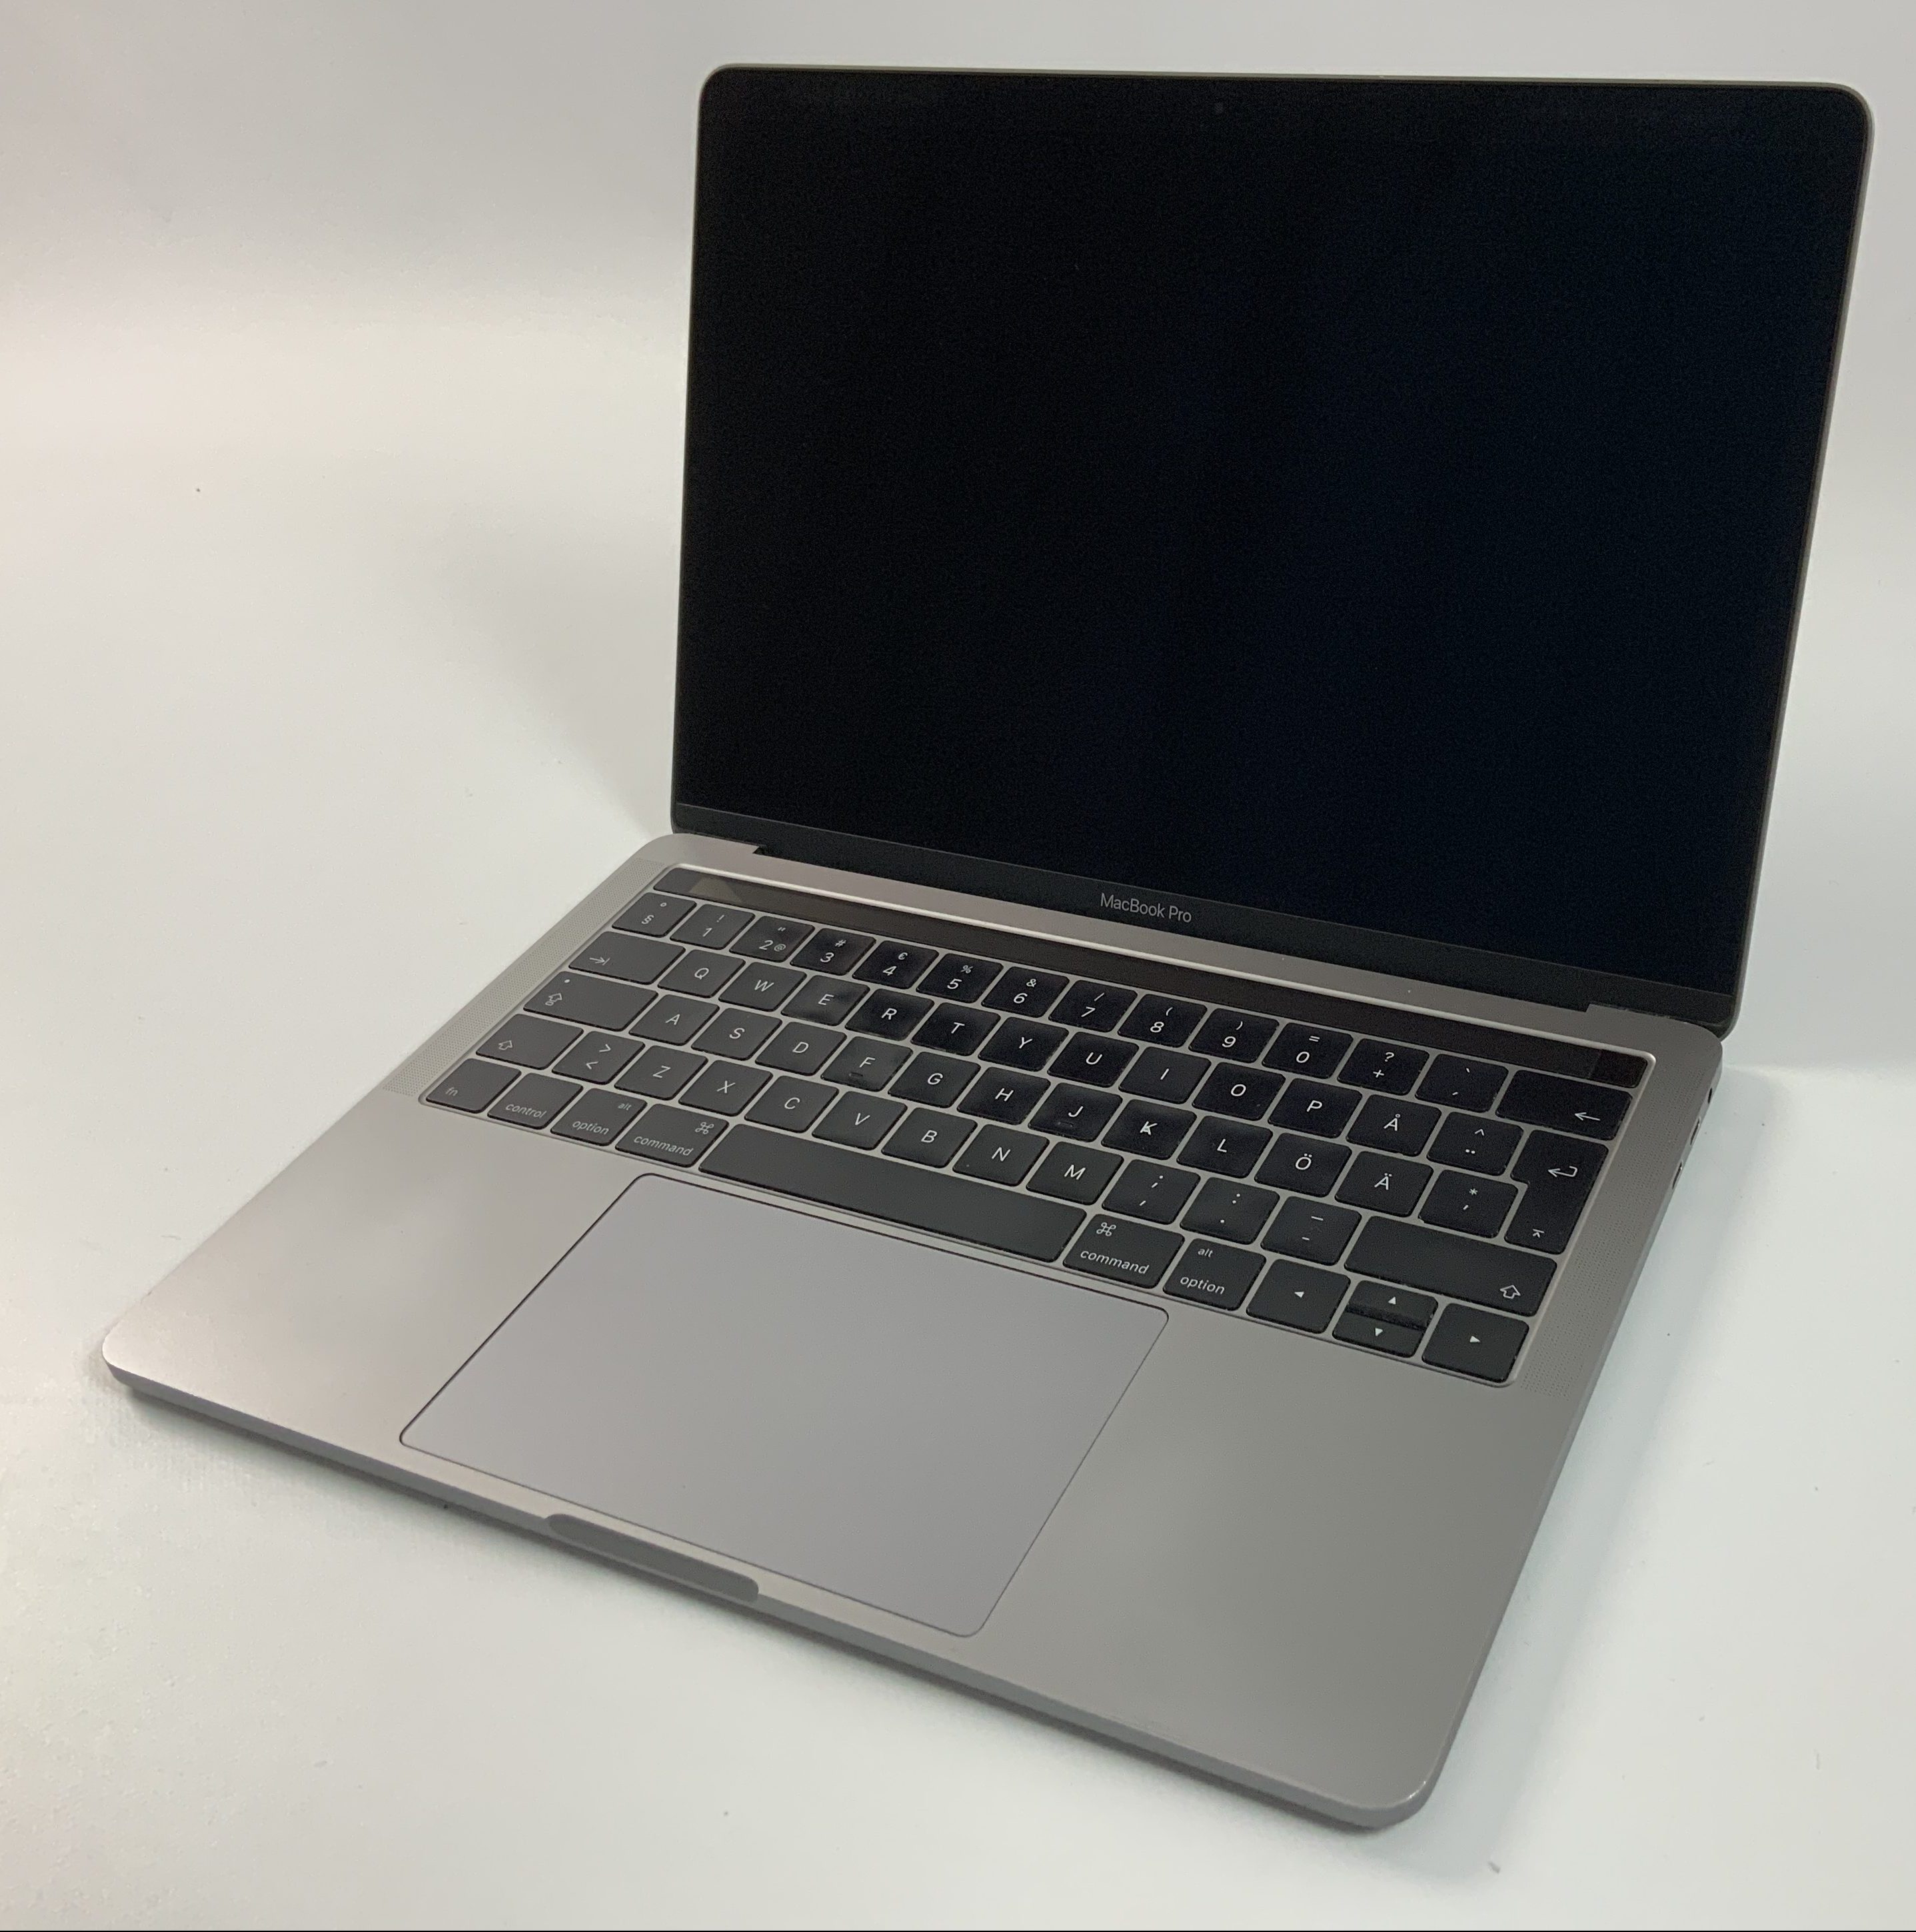 MacBook Pro 13" 4TBT Late 2016 (Intel Core i5 2.9 GHz 8 GB RAM 512 GB SSD), Space Gray, Intel Core i5 2.9 GHz, 8 GB RAM, 512 GB SSD, image 1